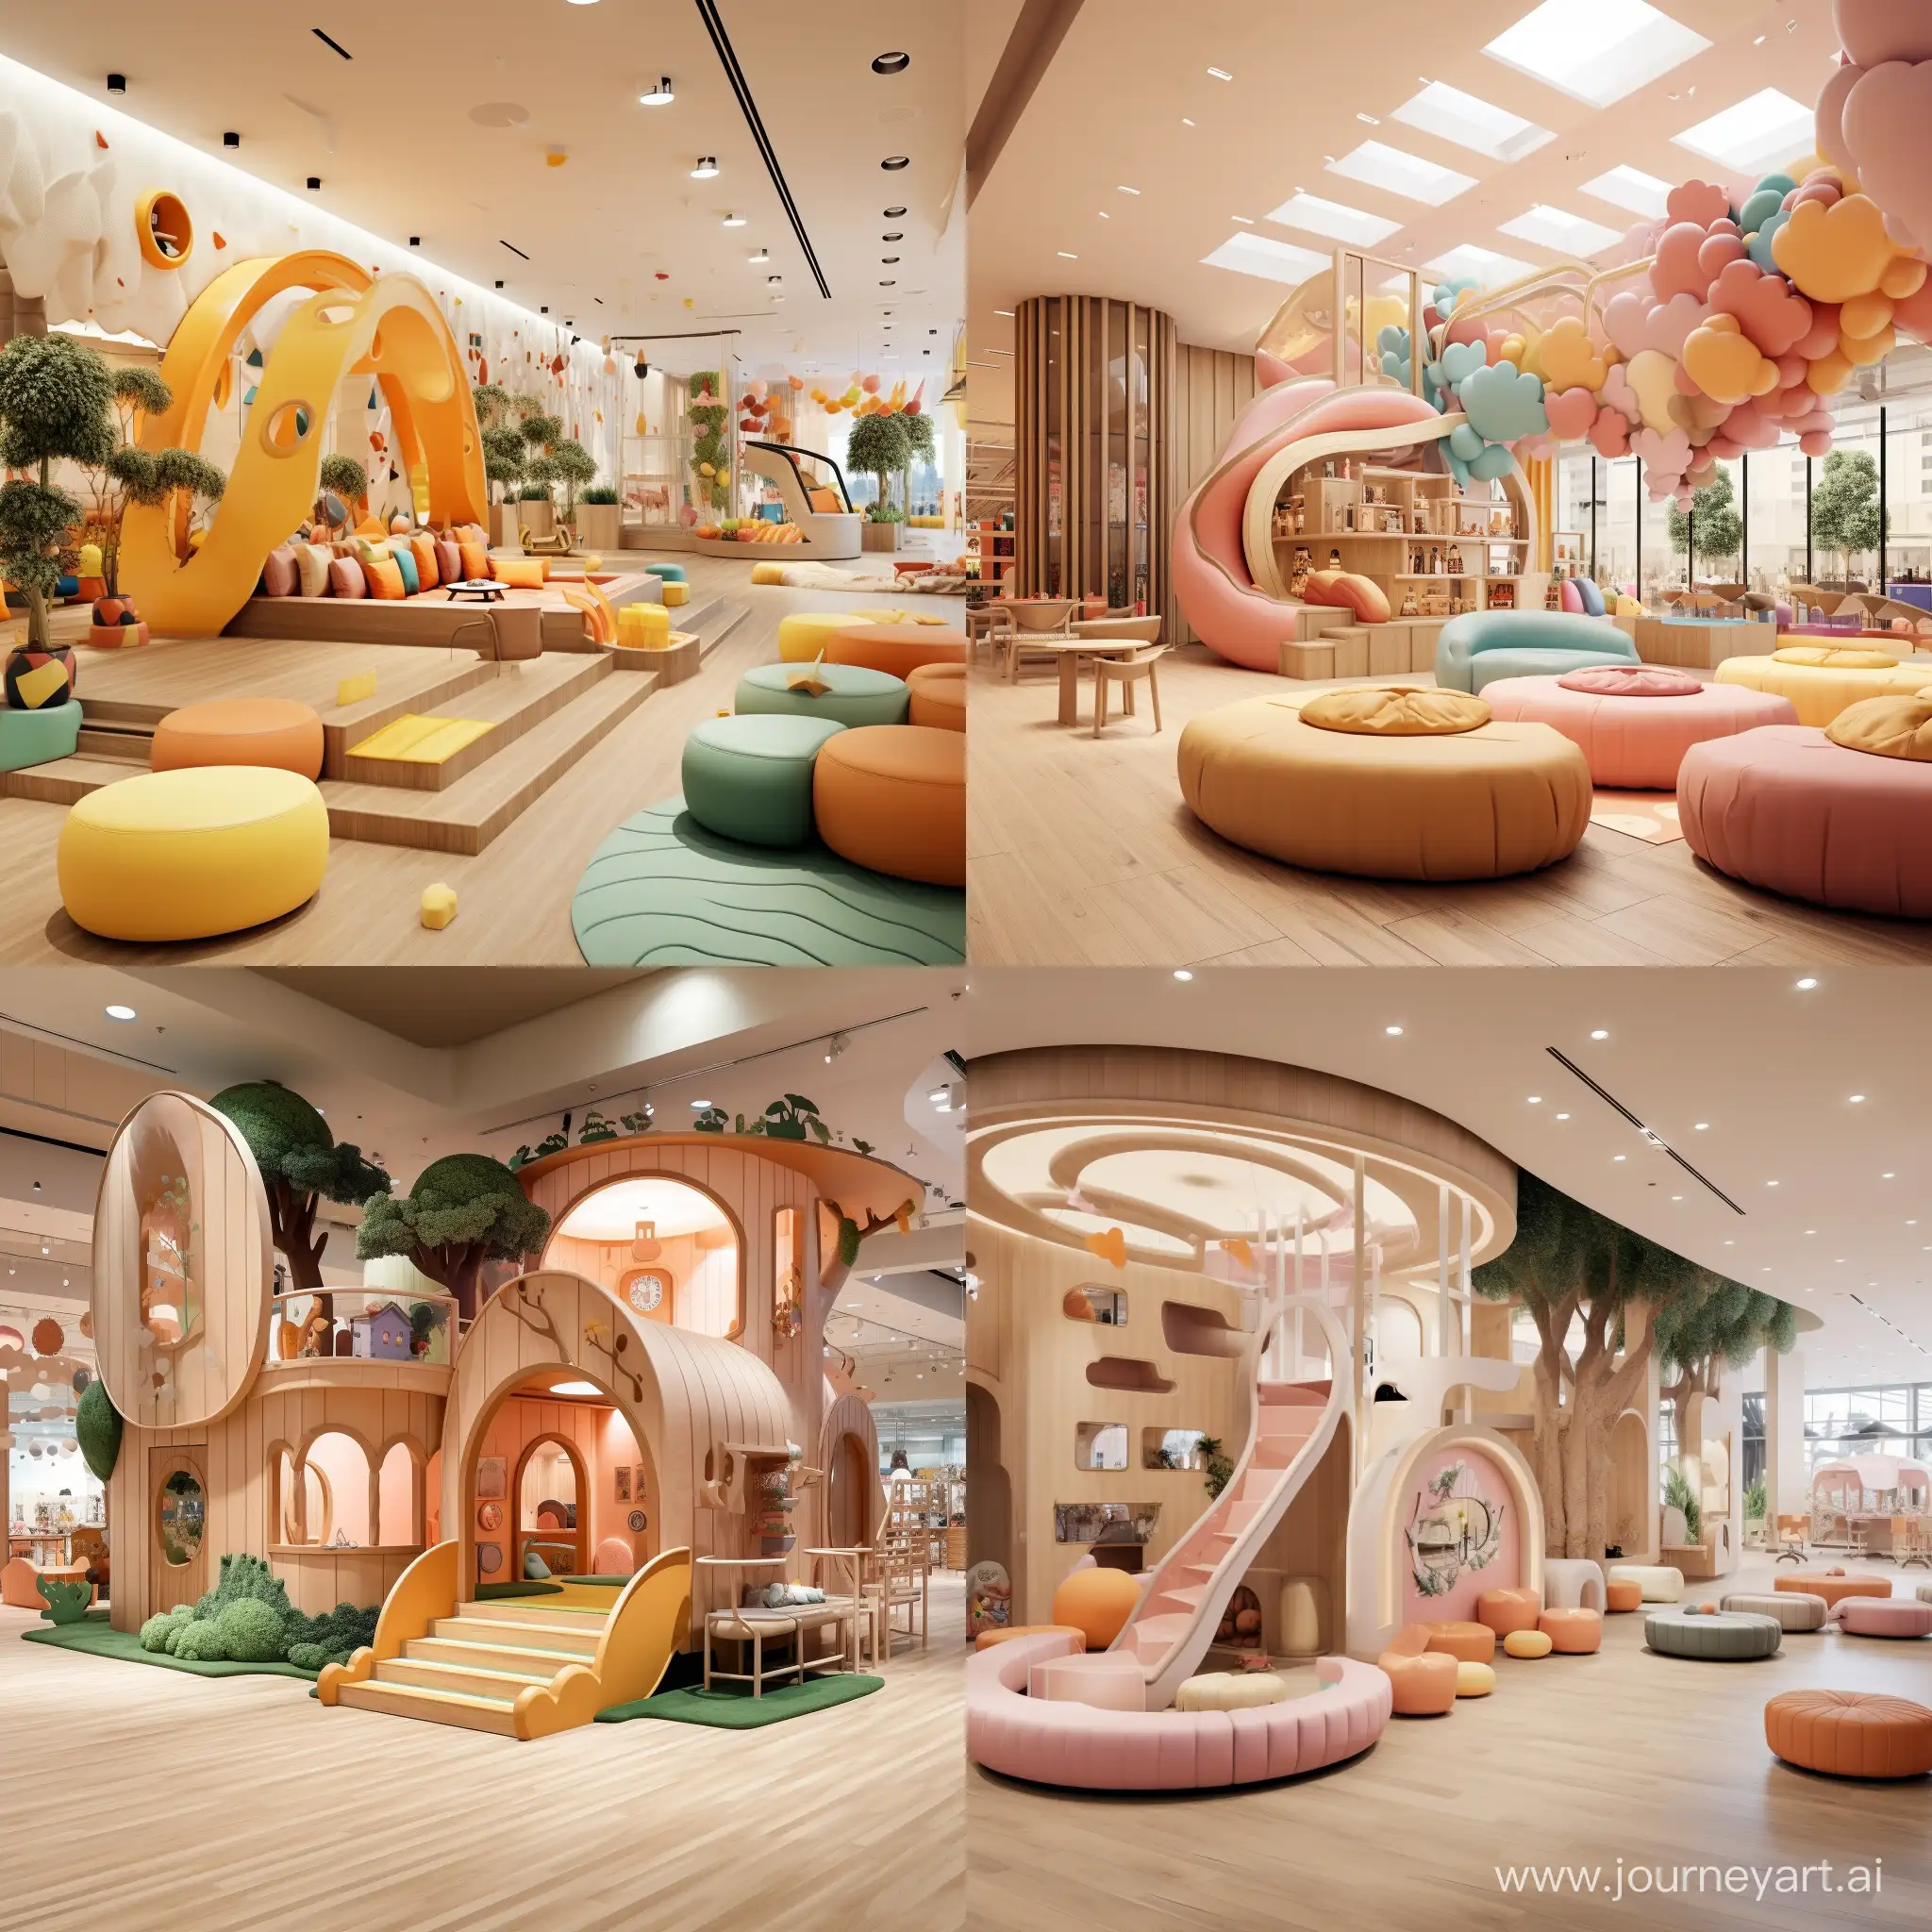 Whimsical-Childrens-Playroom-Design-at-Shopping-Center